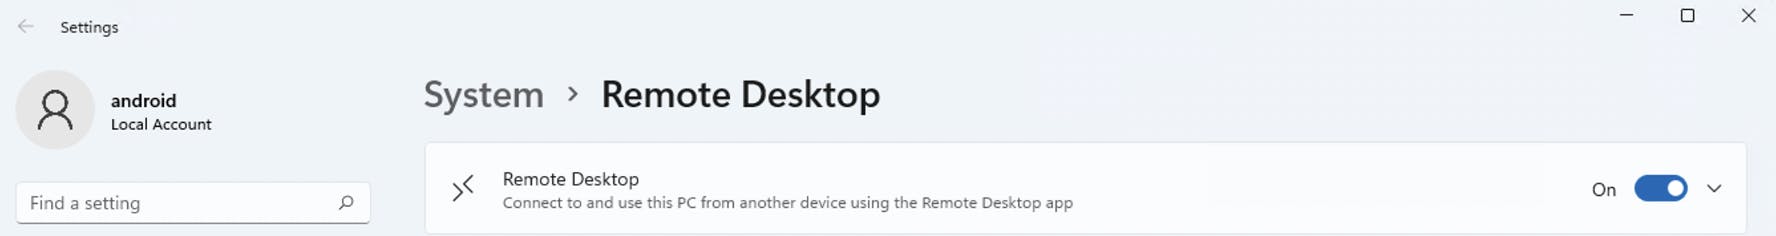 Remote Desktop setting on Windows 11